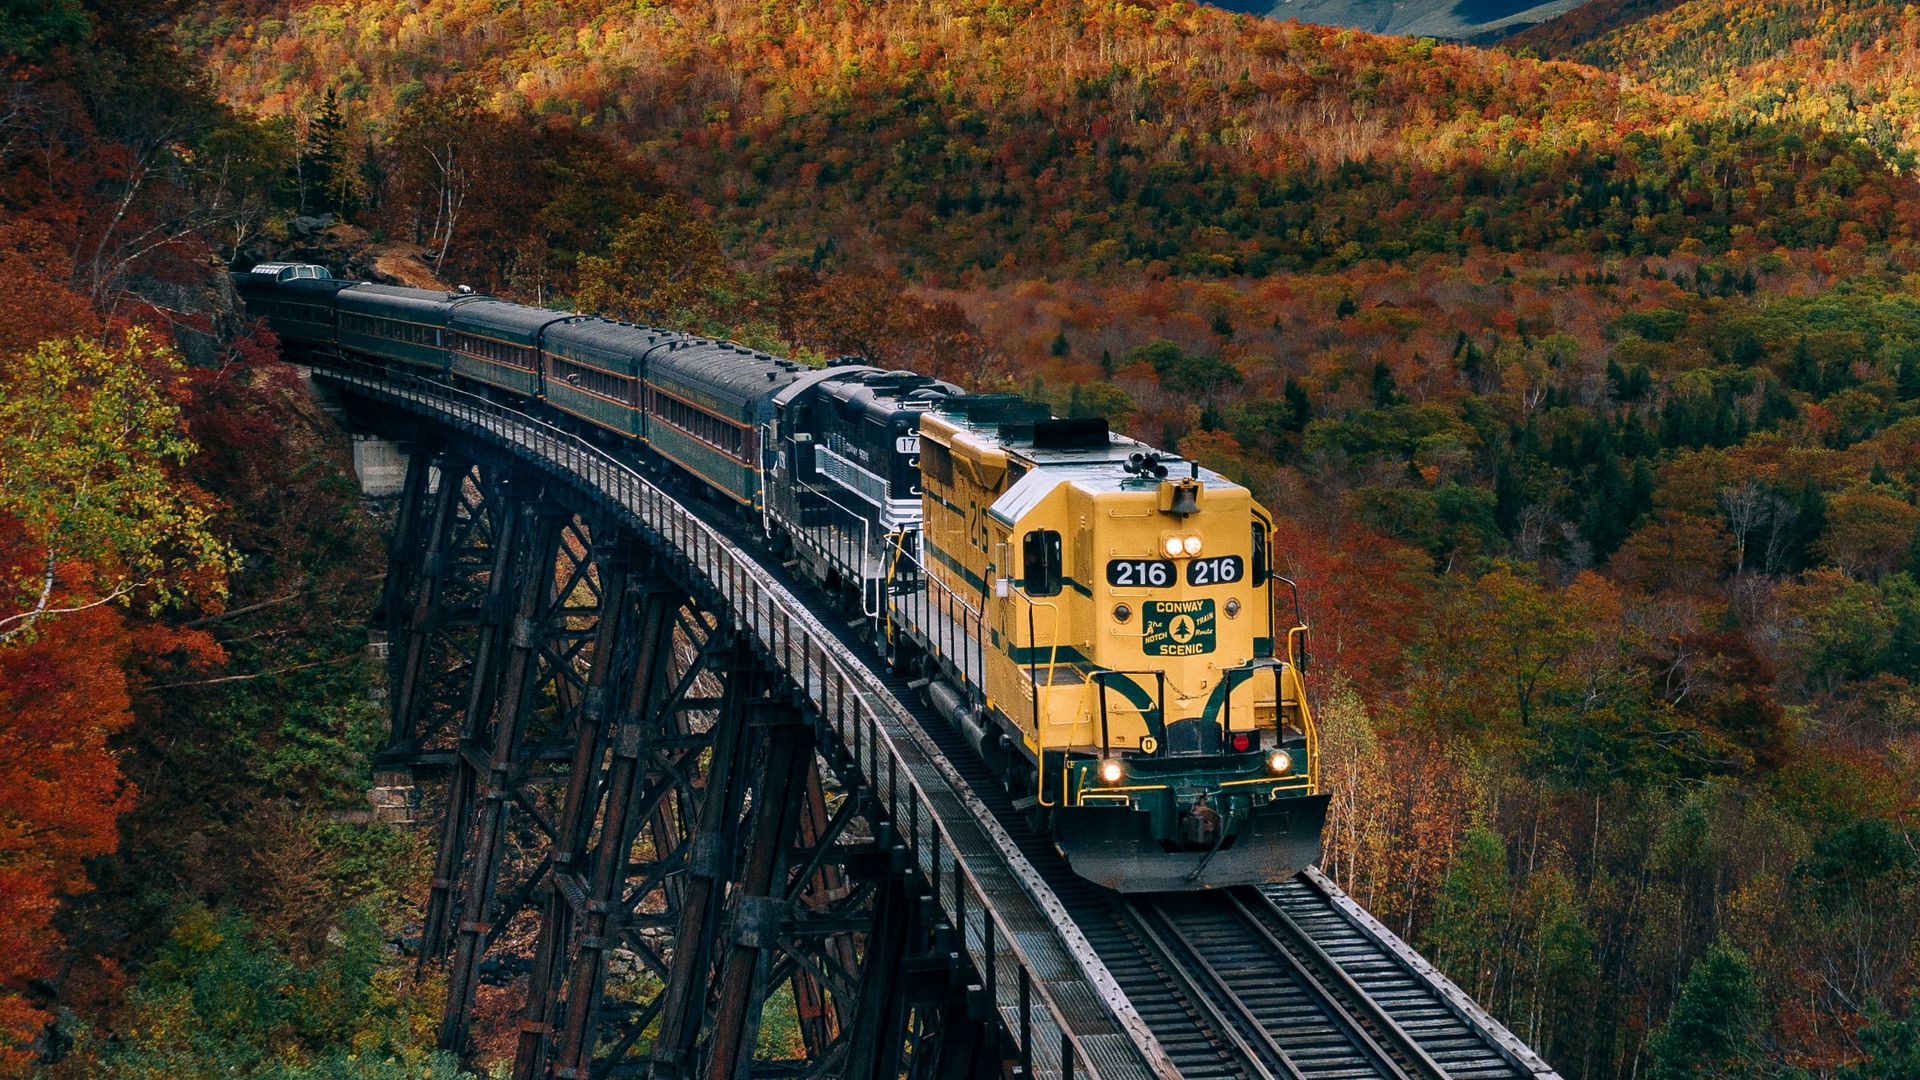 Download wallpaper 1920x1080 train, railroad, autumn, trees full hd, hdtv,  fhd, 1080p hd background